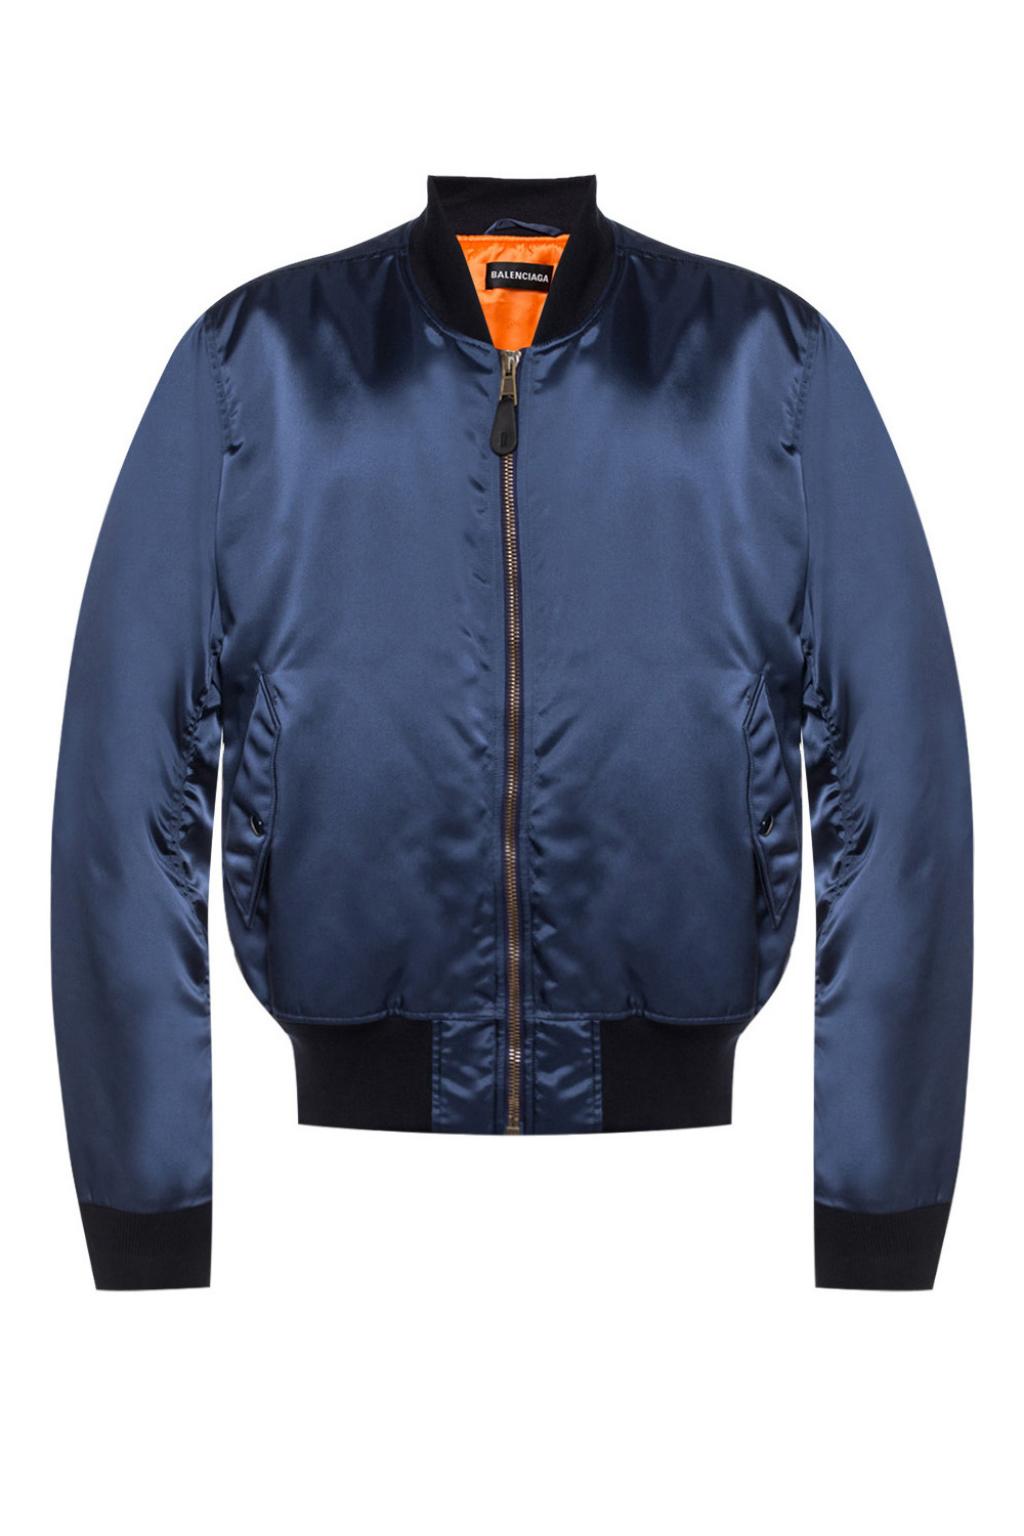 balenciaga blue bomber jacket